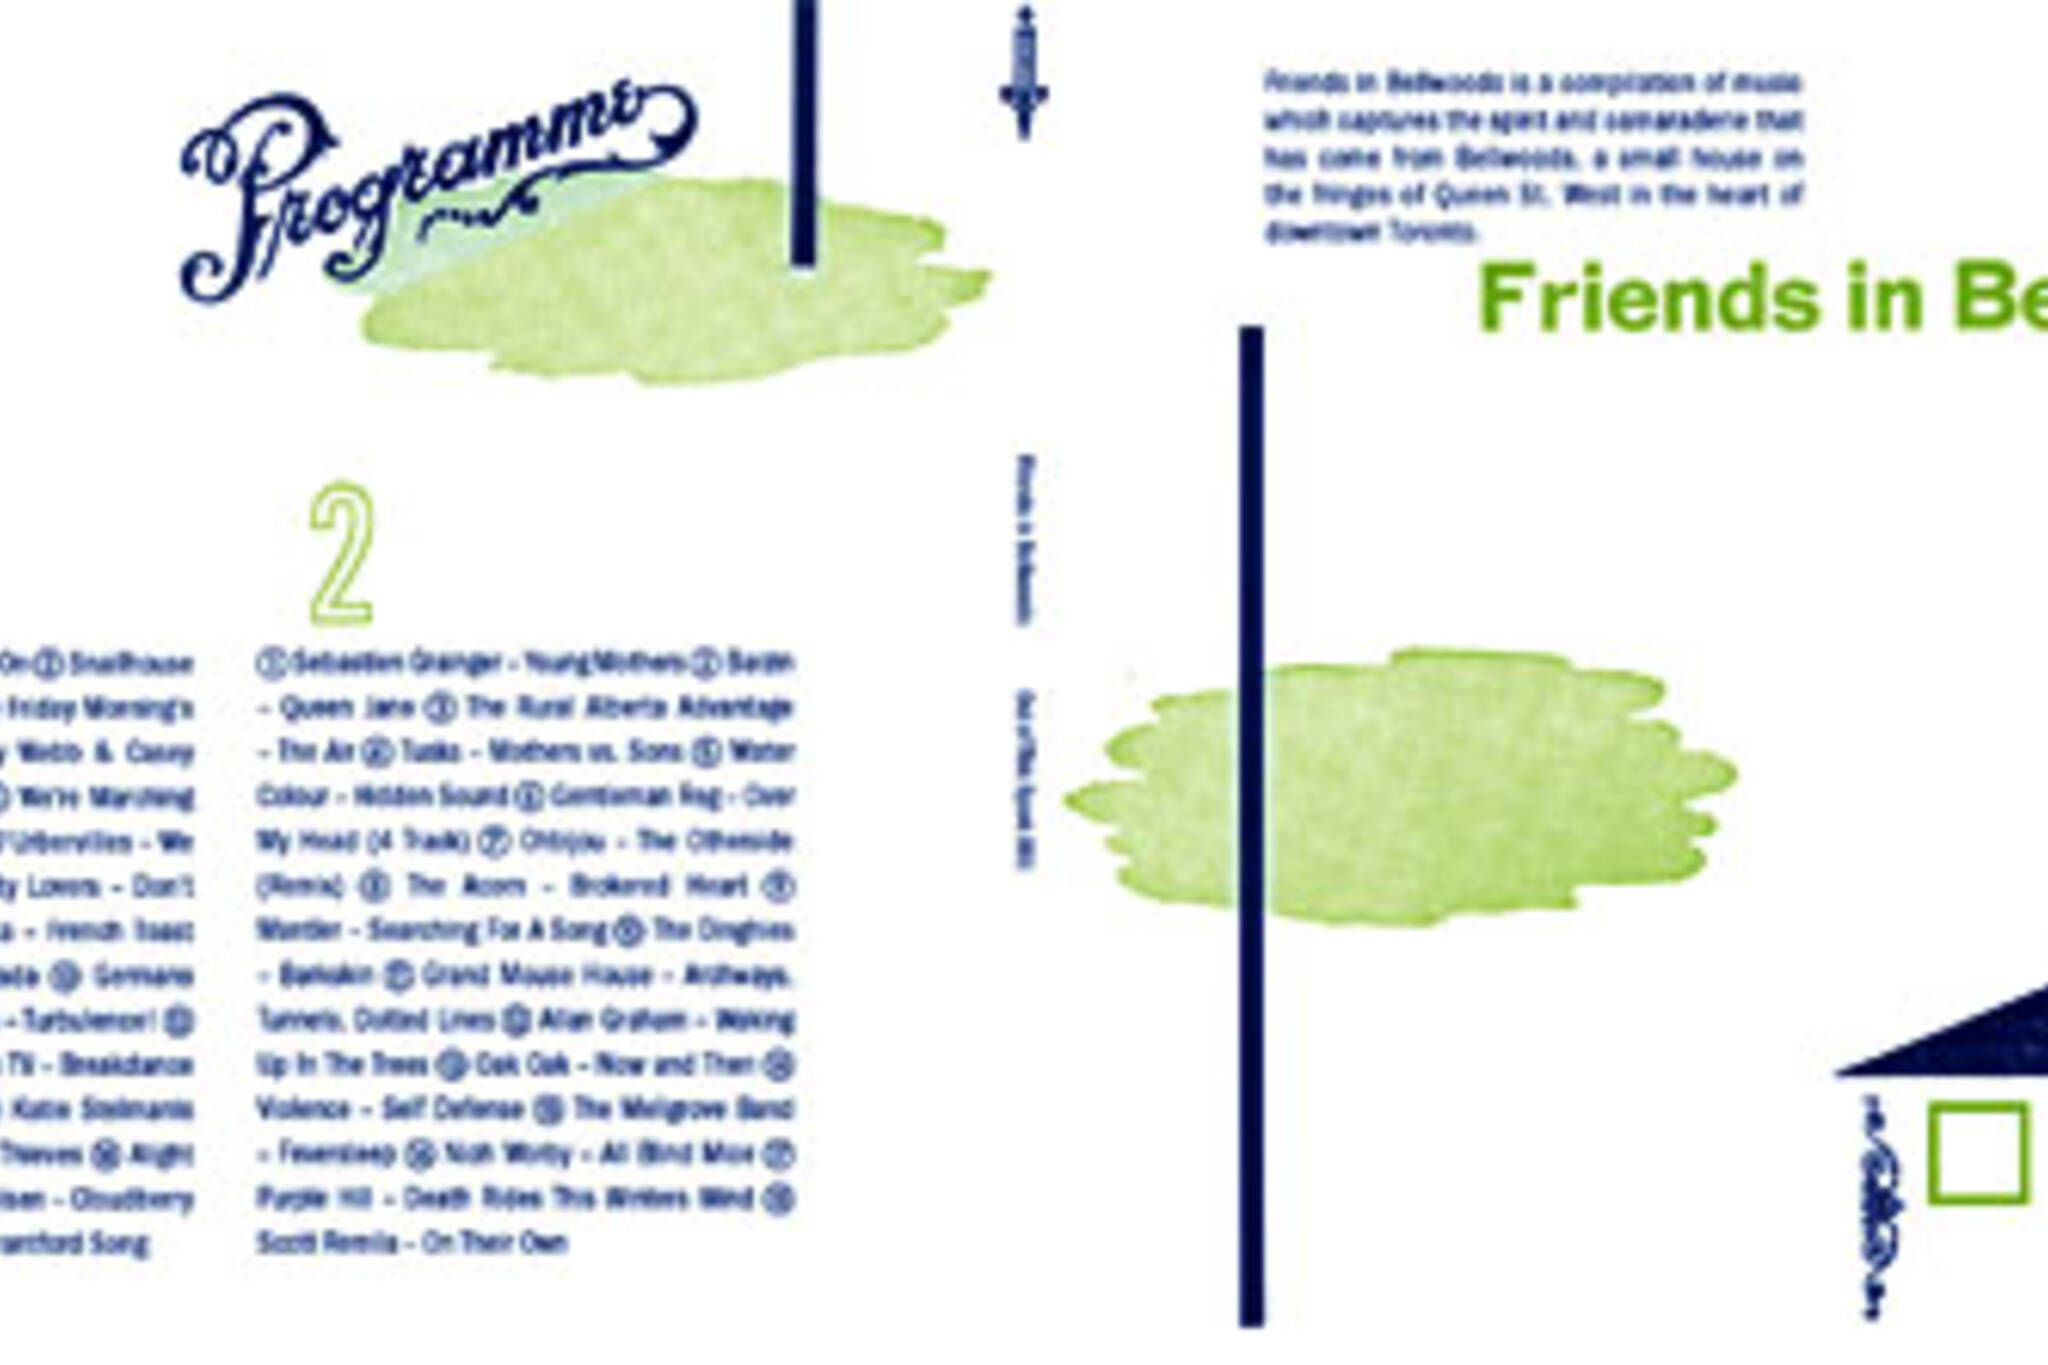 Friends in Bellwoods Cover art by Nicholas Kennedy